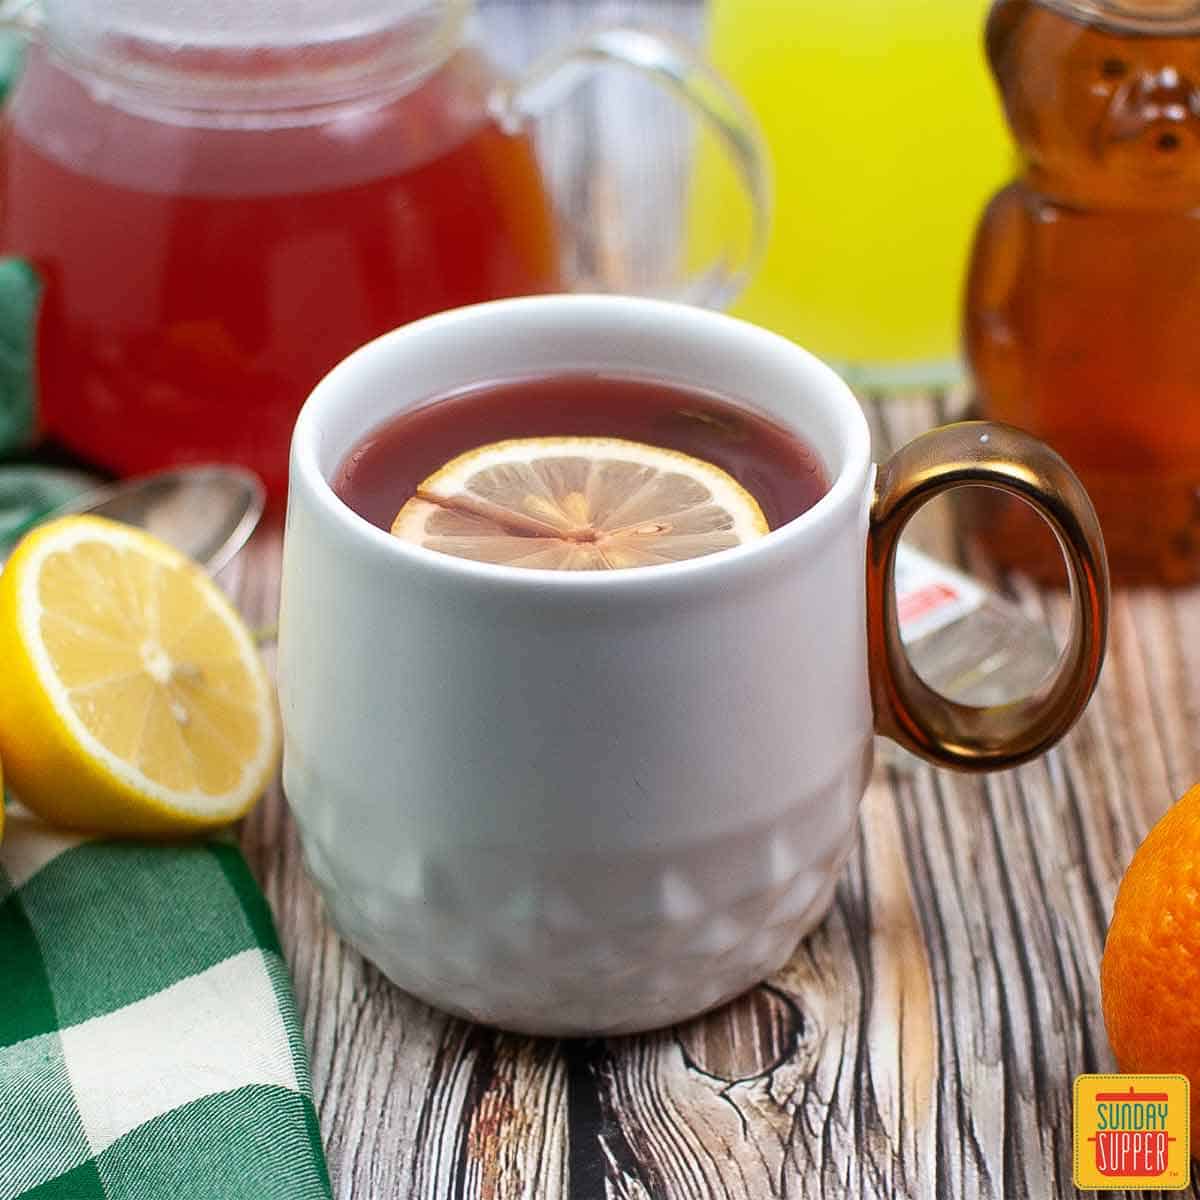 starbucks medicine ball tea in a mug with a slice of lemon next to honey